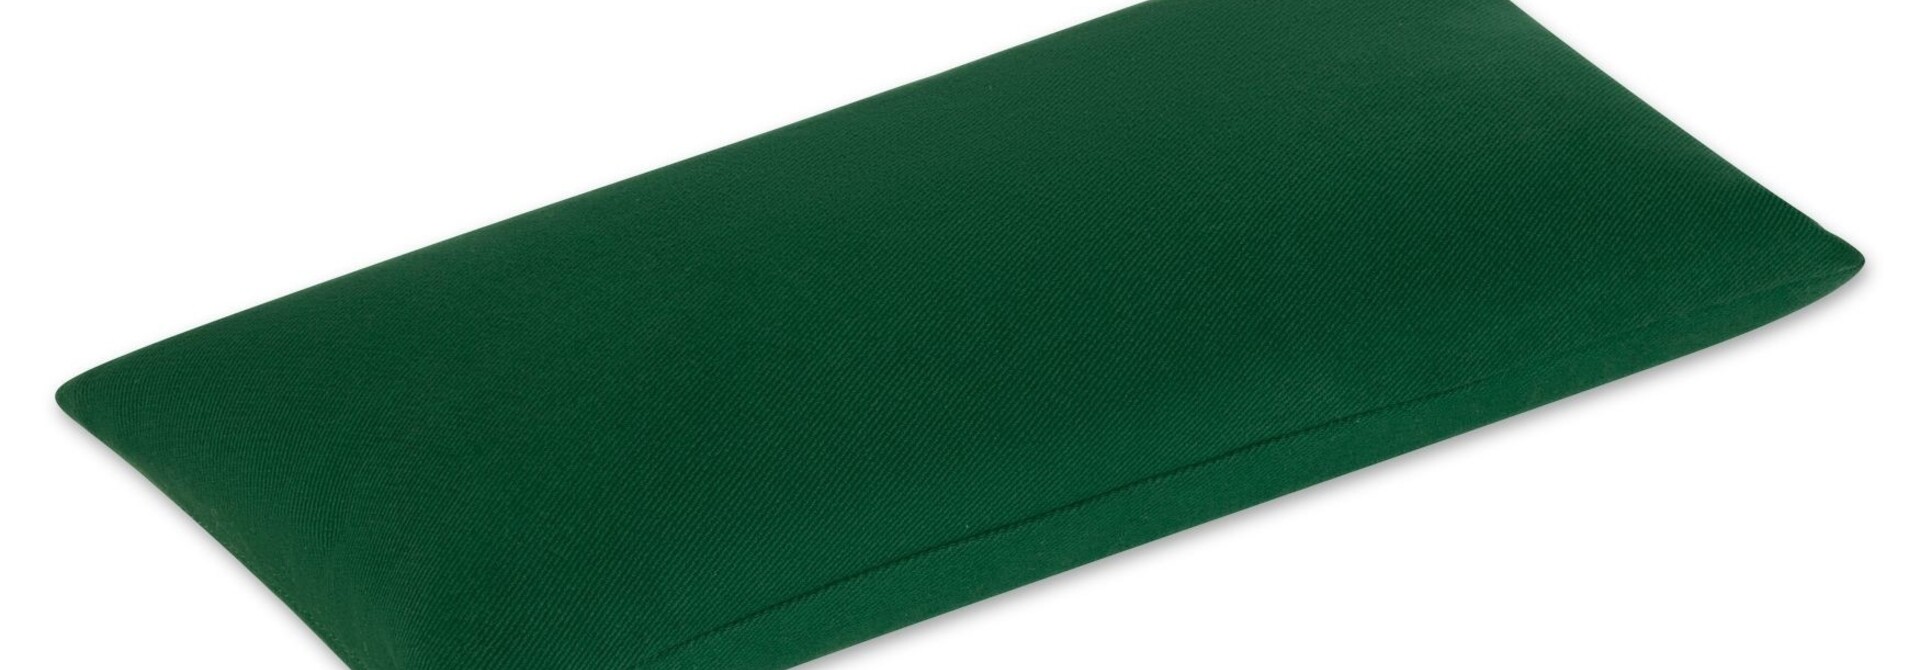 Yogisha Meditation Bench Cushion Deluxe - Green